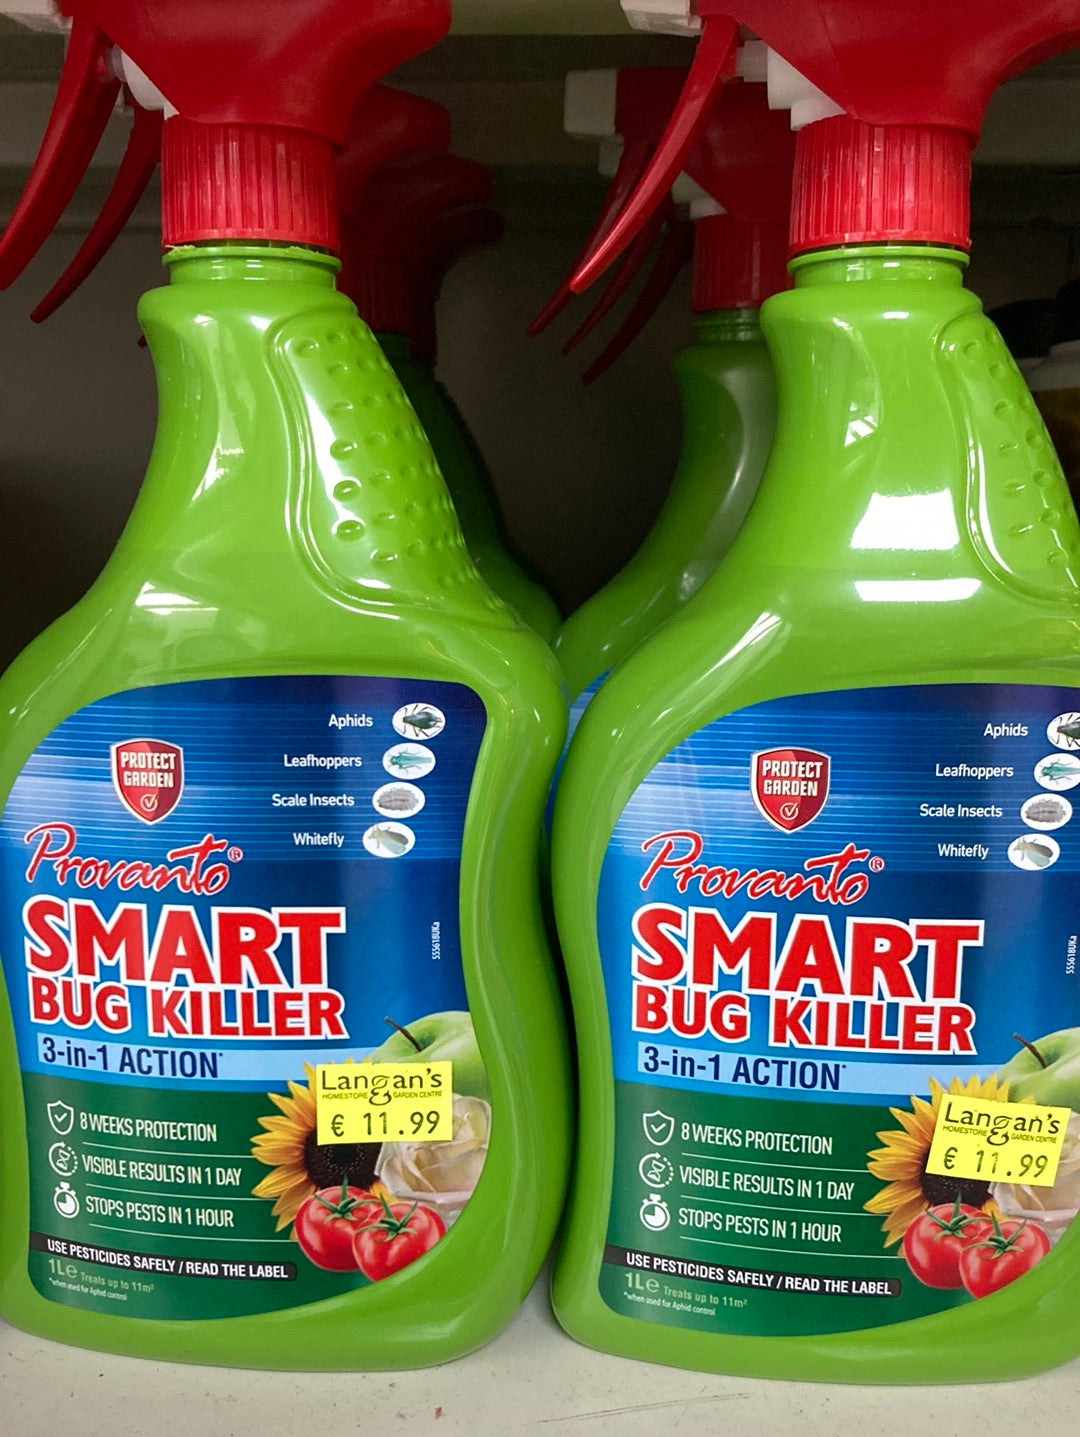 Bug Clear Vine Weevil Killer 480ml - Pest & Disease Control - Millais  Nurseries